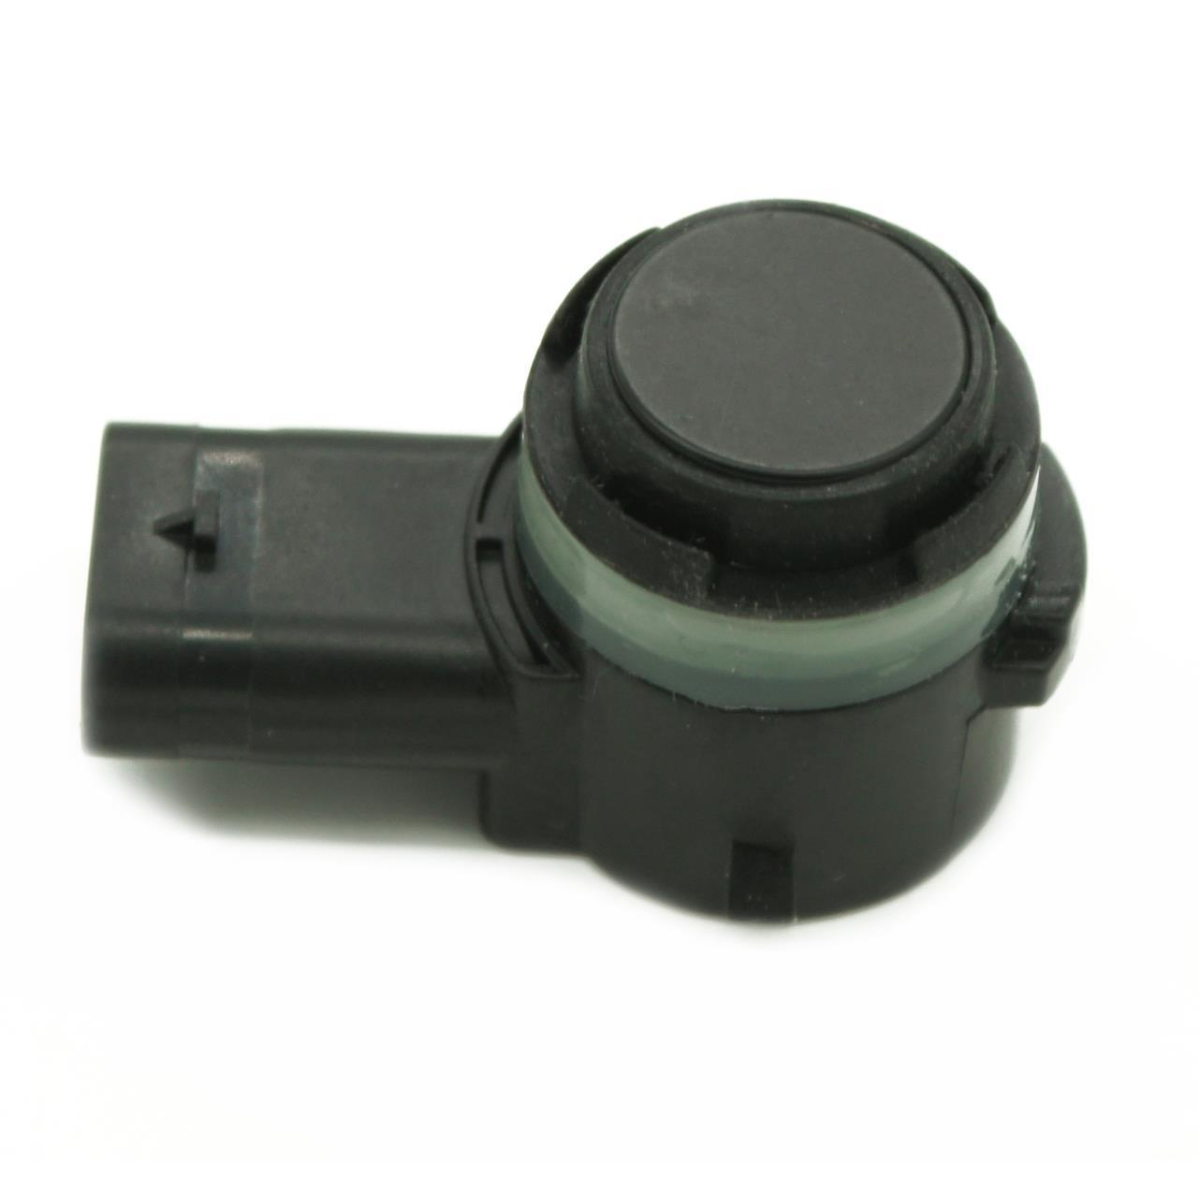 Parking sensor HK83-15K859-BA for Land Rover PDC Parktronic